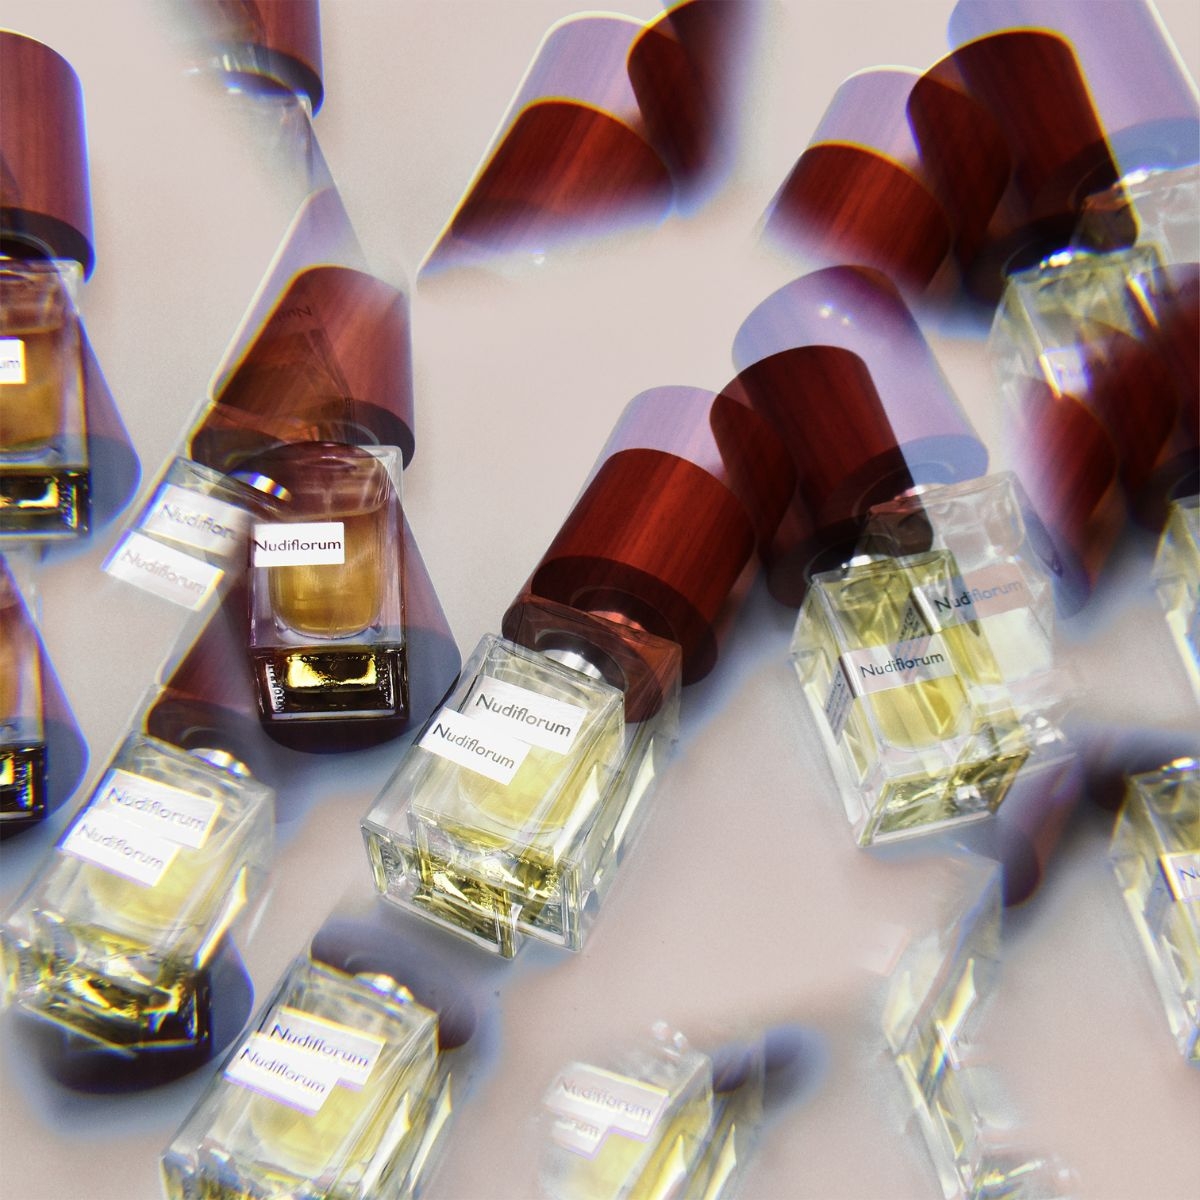 Image of Nudiflorum extrait de parfum 30 ml by the perfume brand Nasomatto